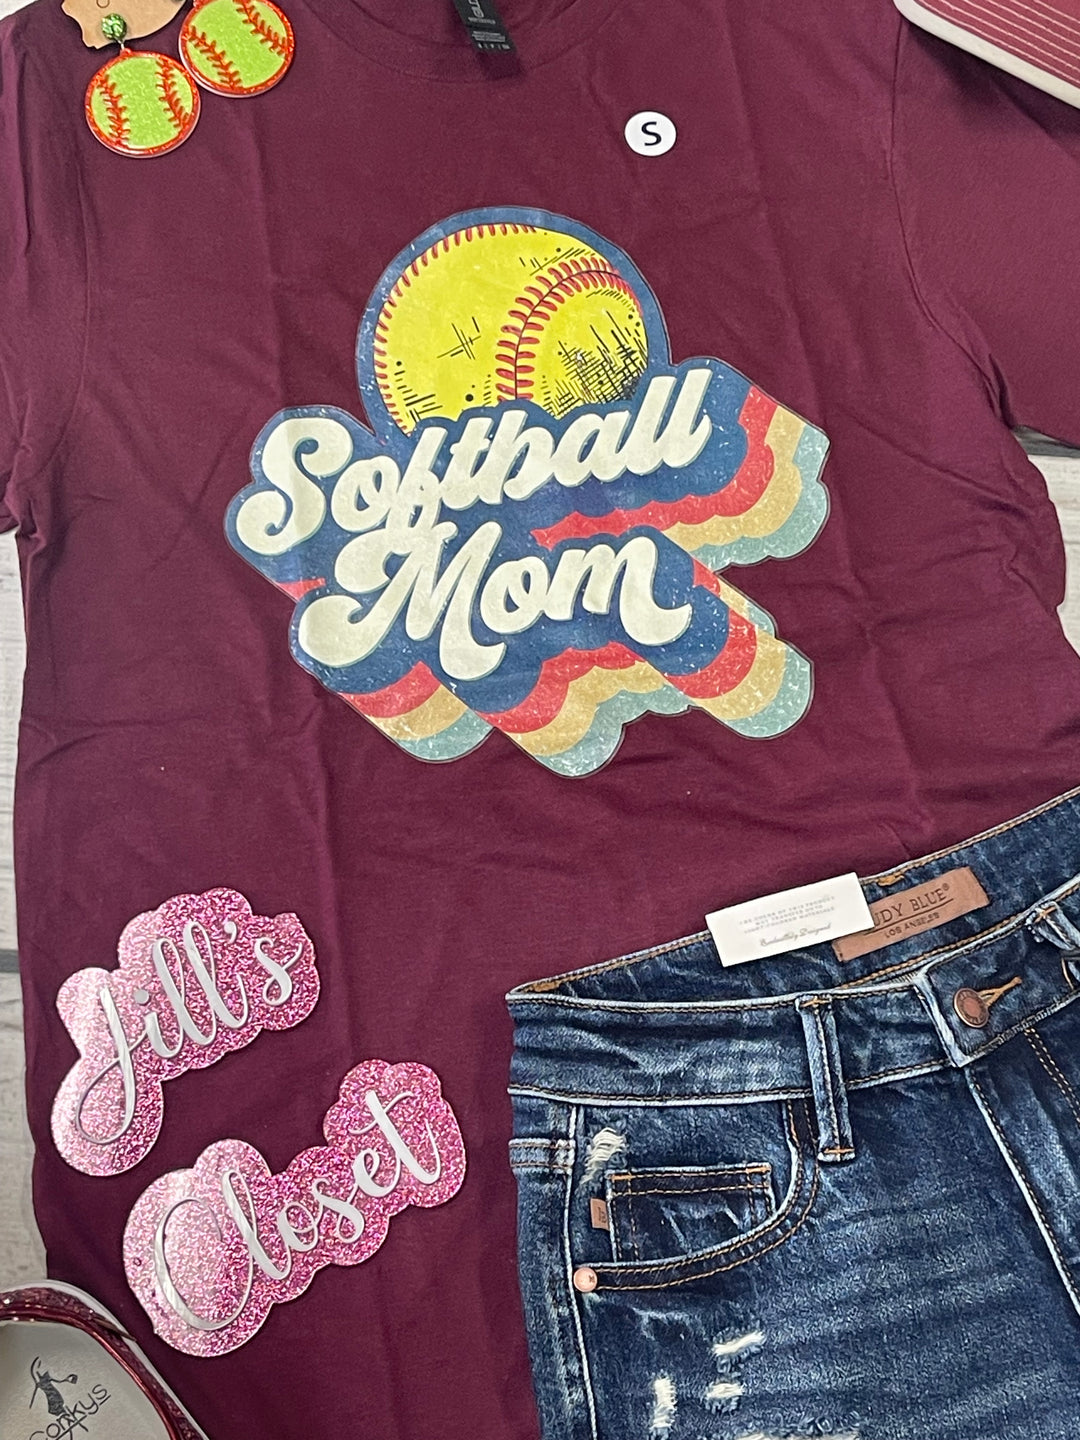 Retro Softball mom tee